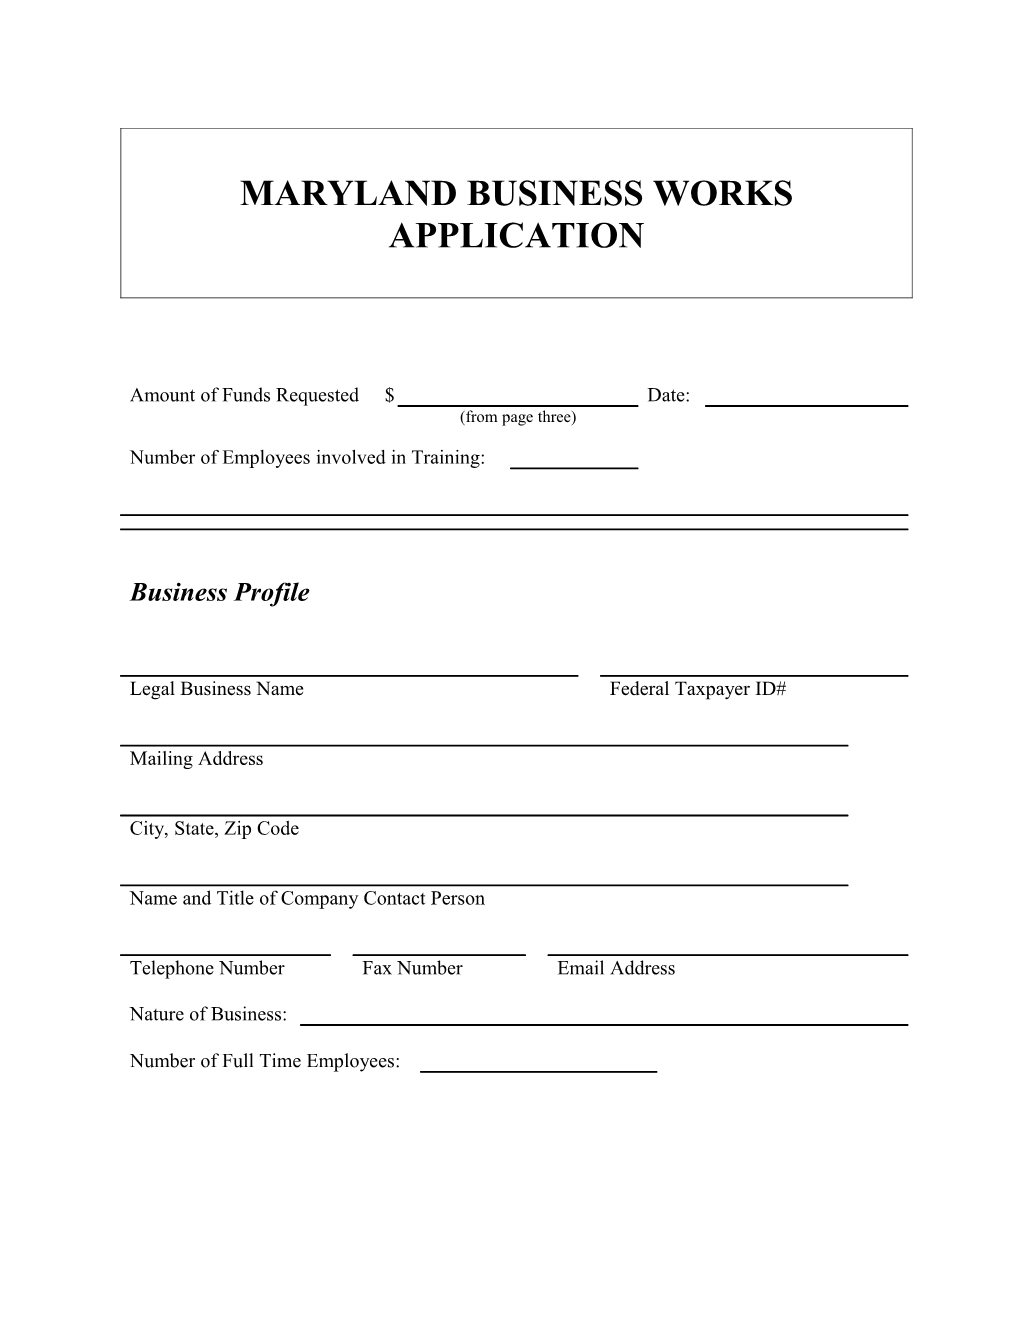 Maryland Works Application